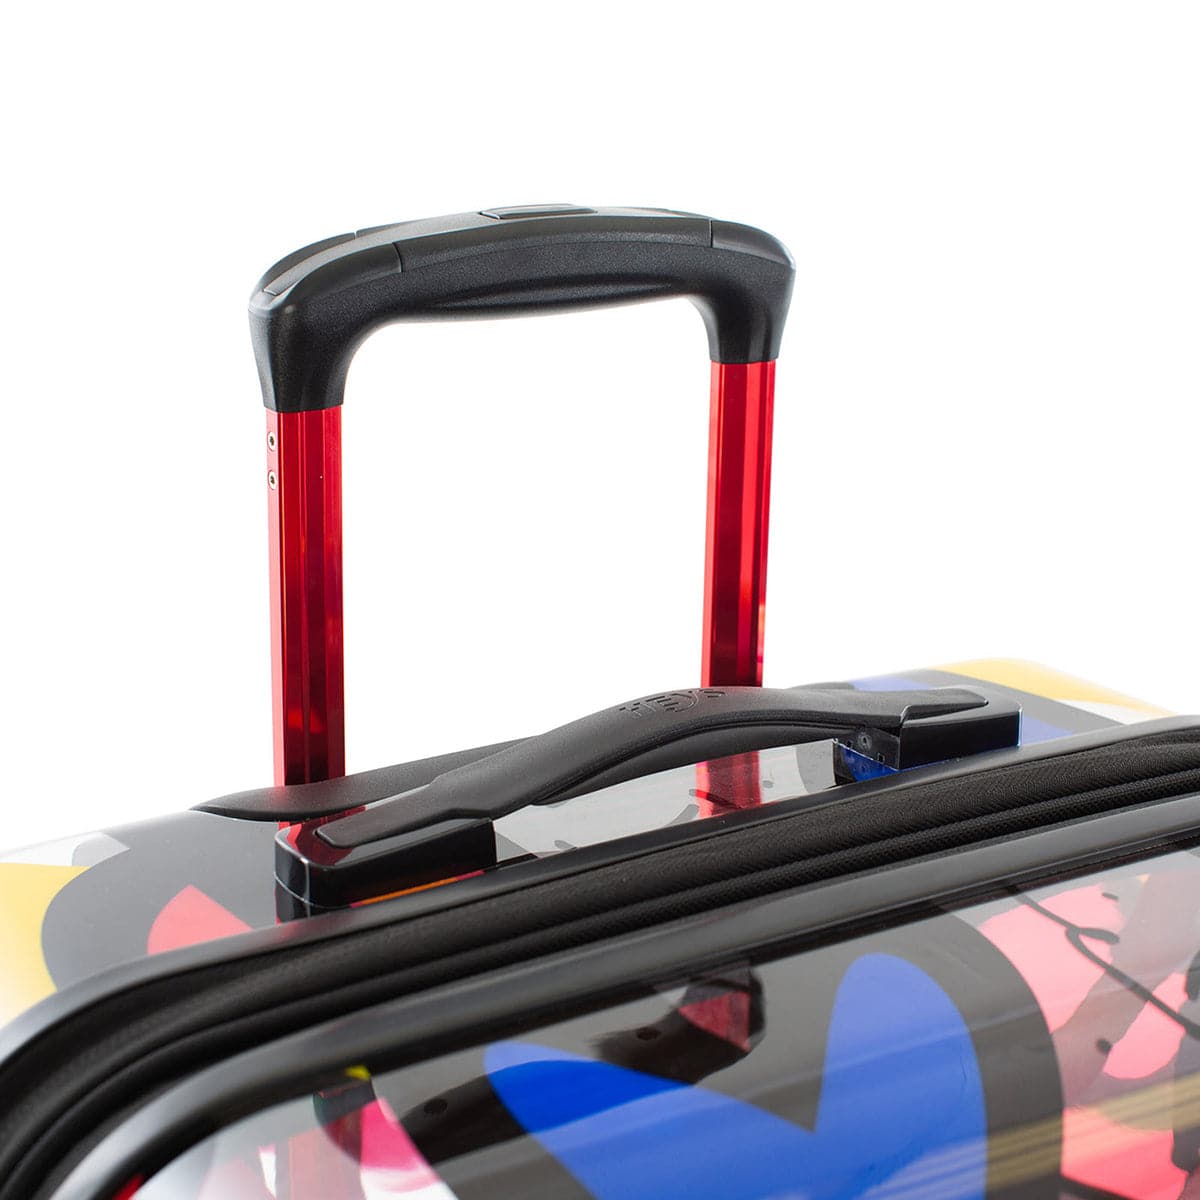 Heys Britto 30" Transparent The Art of Modern Travel Luggage